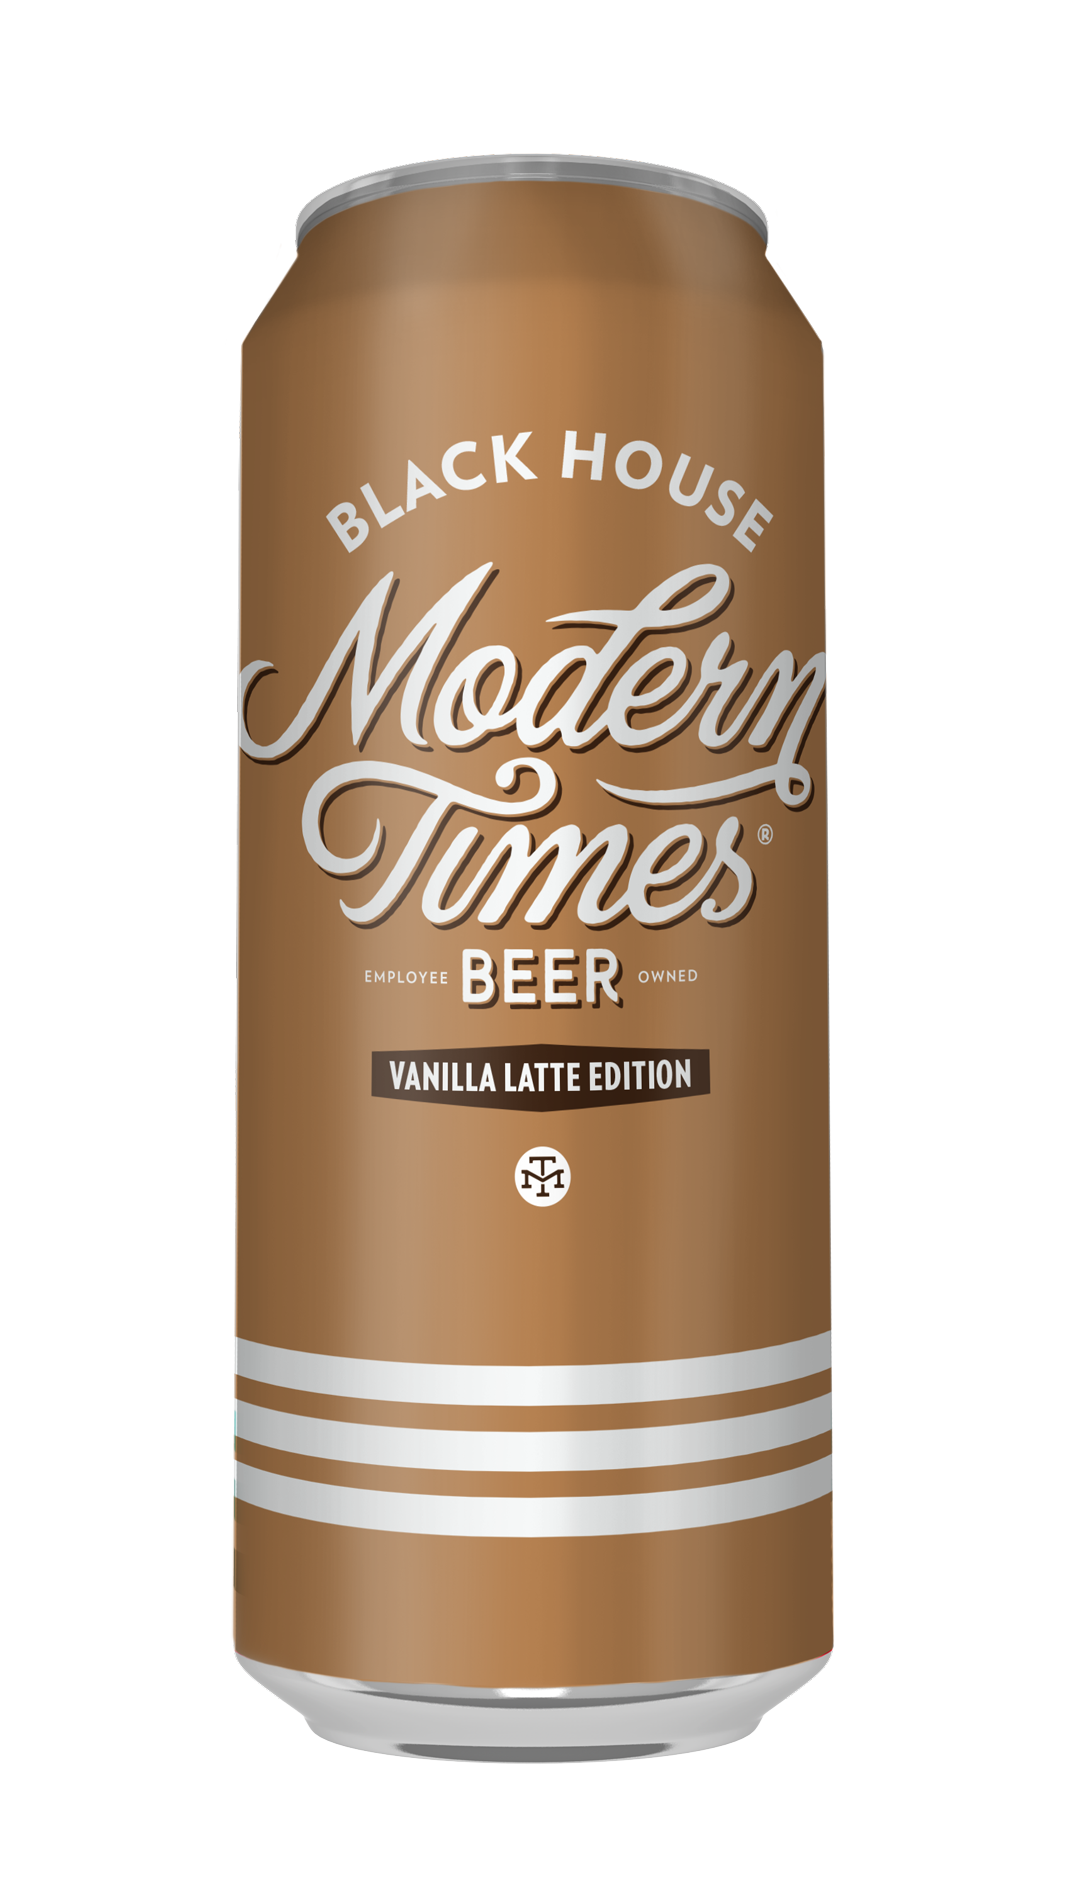 Buy Modern Times Black House Vanilla Latte Online -Craft City